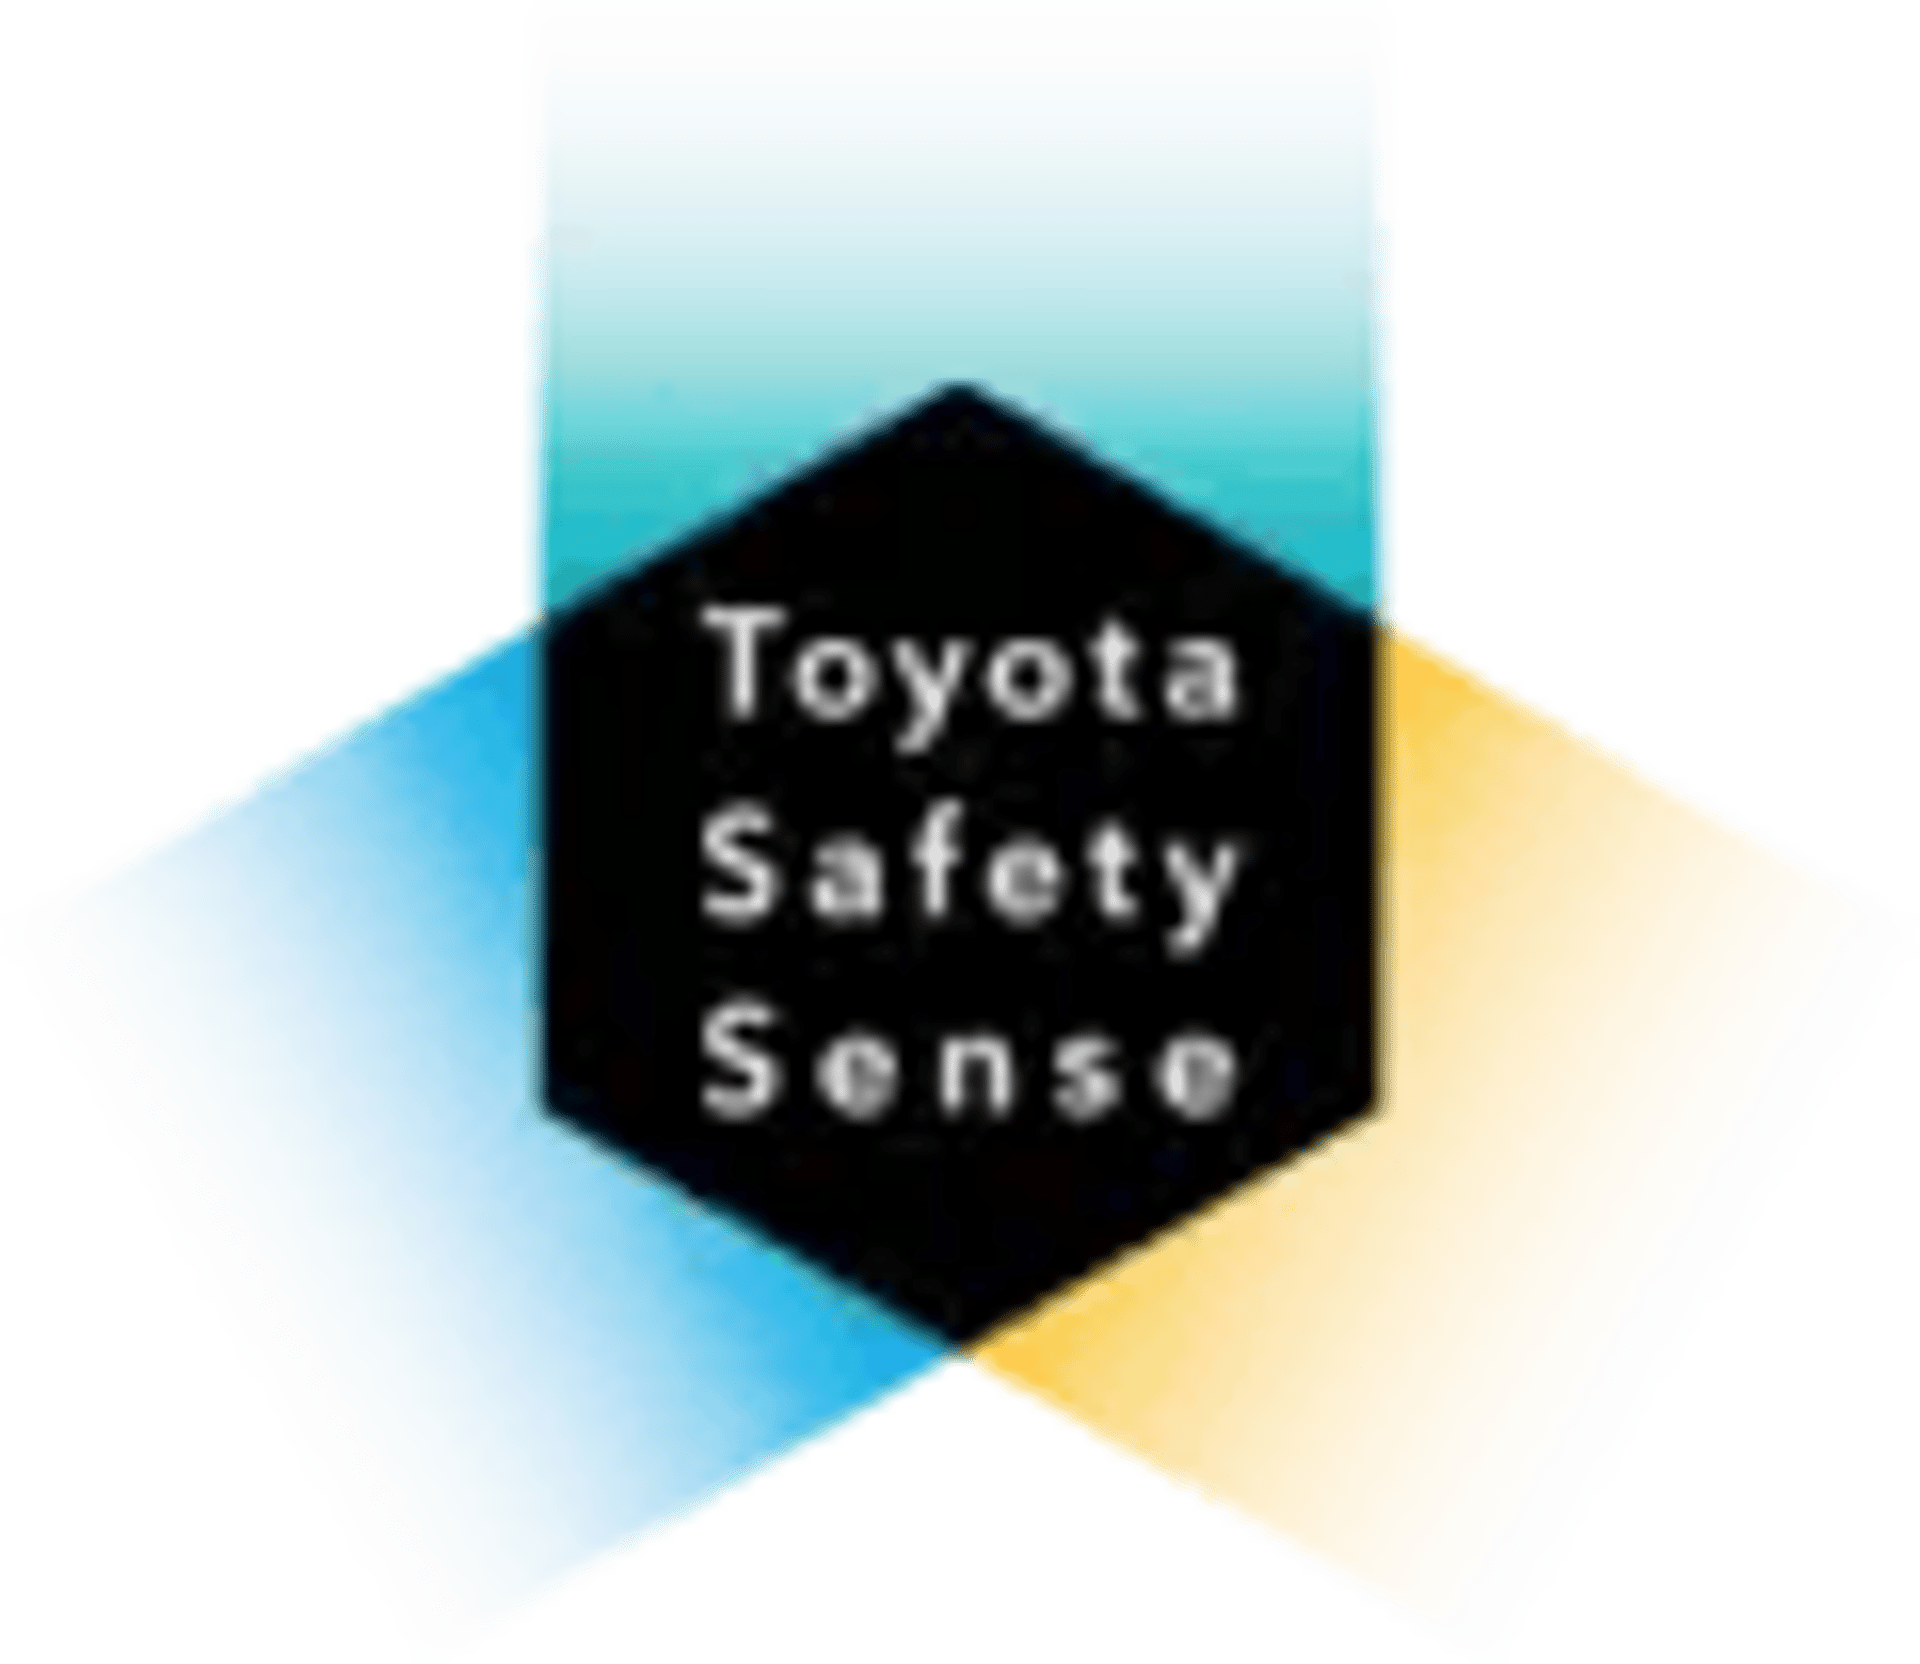 Toyota Safety Sense Image